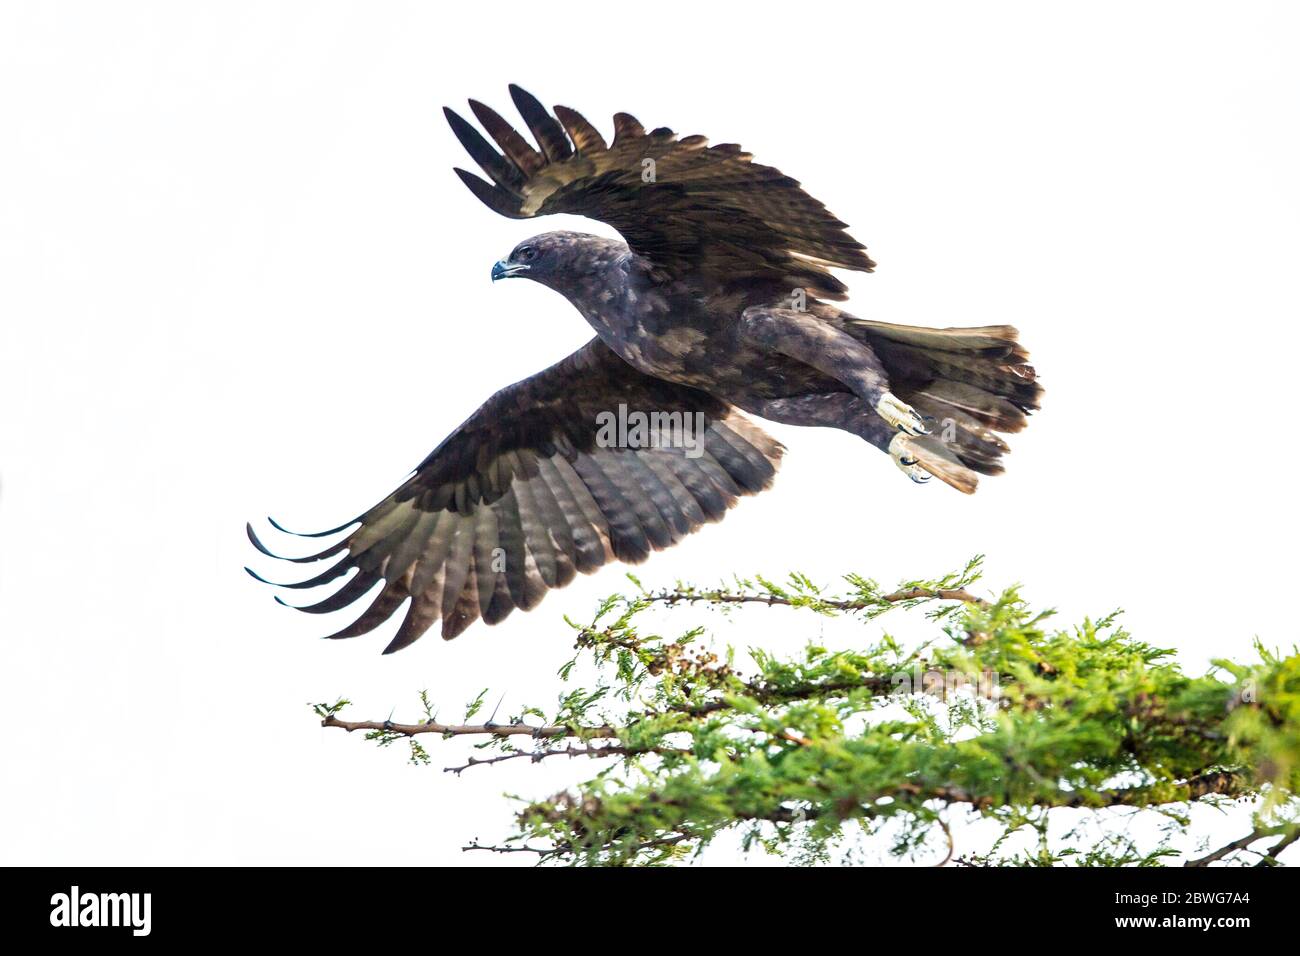 Wahlberg's eagle (Hieraaetus wahlbergi), Serengeti National Park, Tanzania, Africa Stock Photo